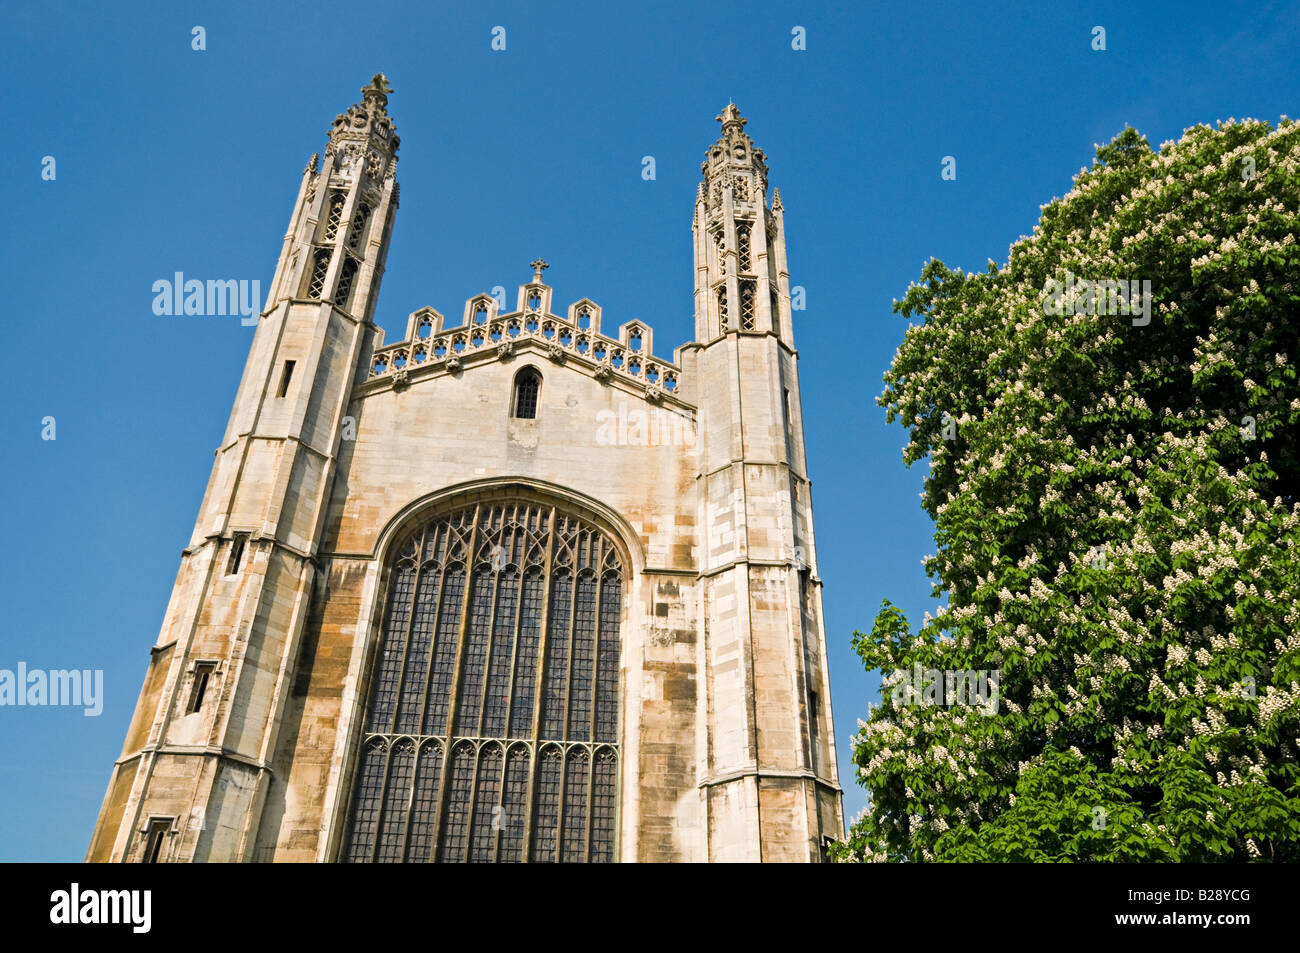 Kings College Cambridge United Kingdom Stock Photo